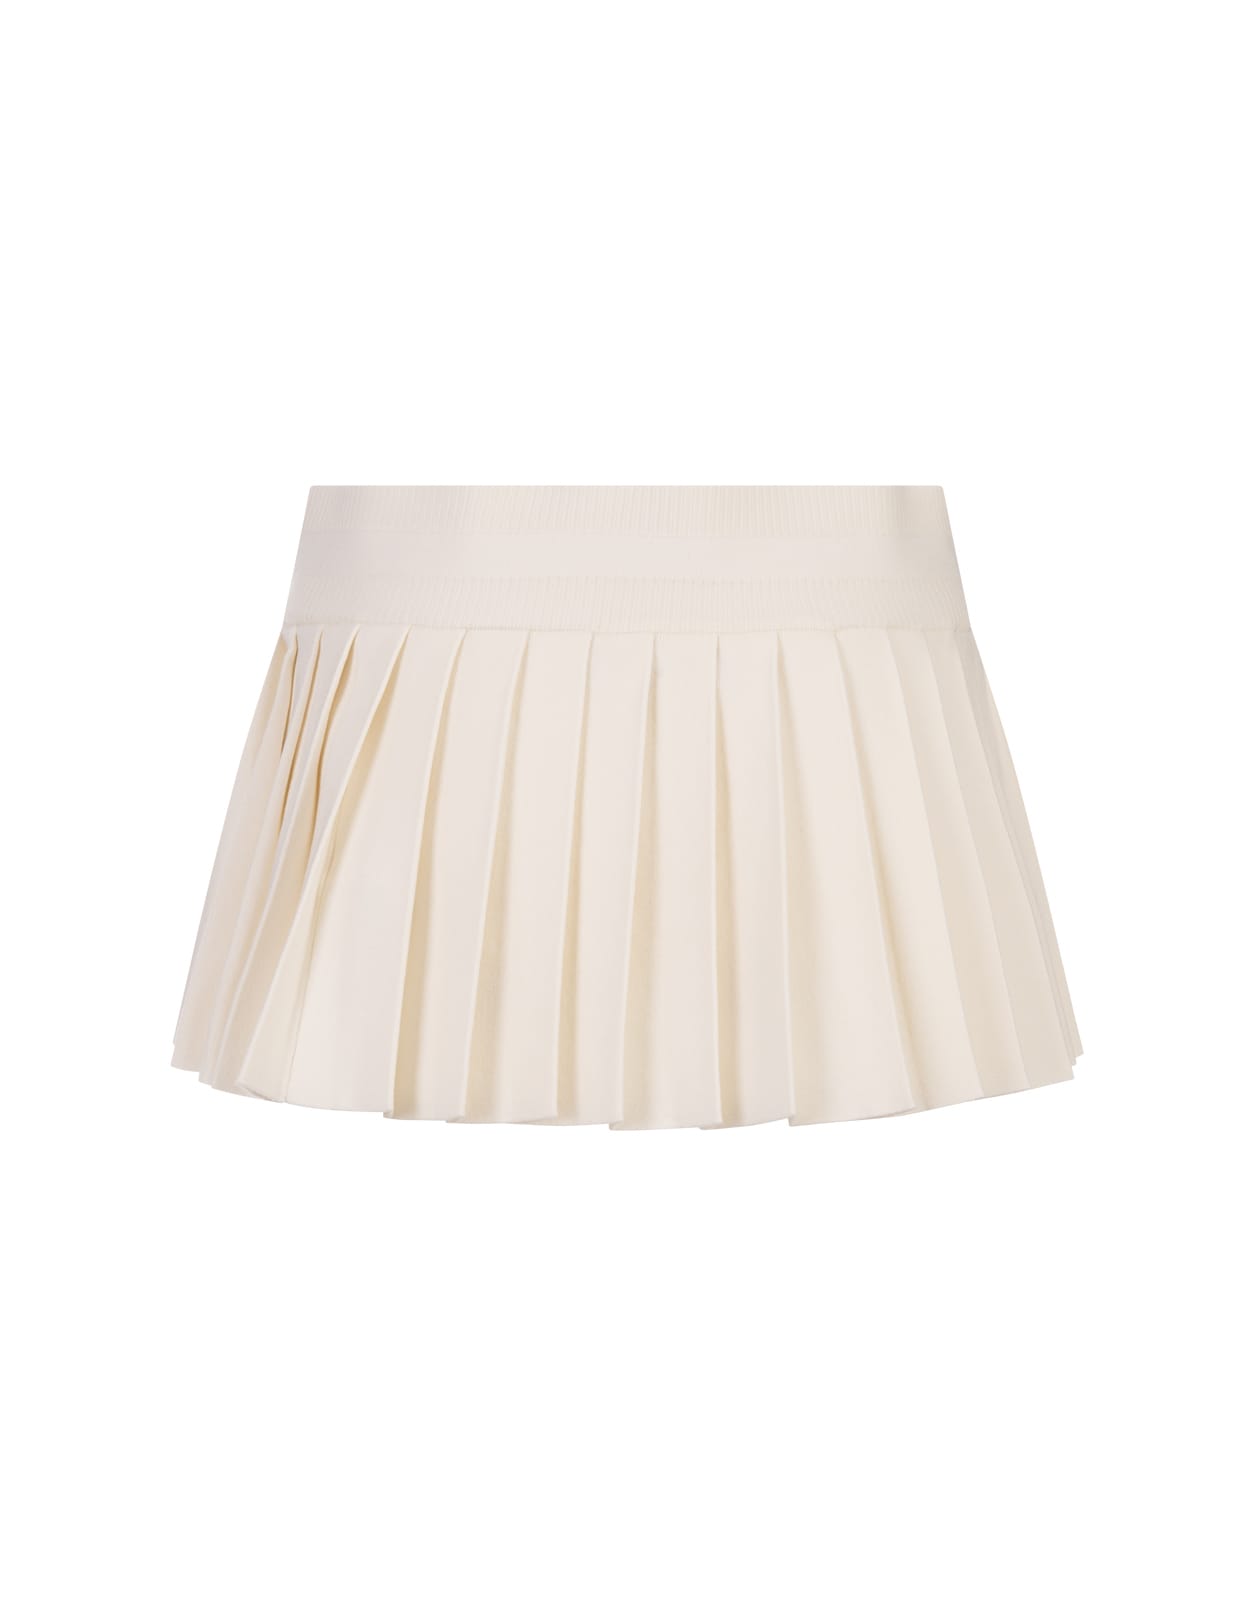 Shop Dsquared2 White Pleated Mini Skirt